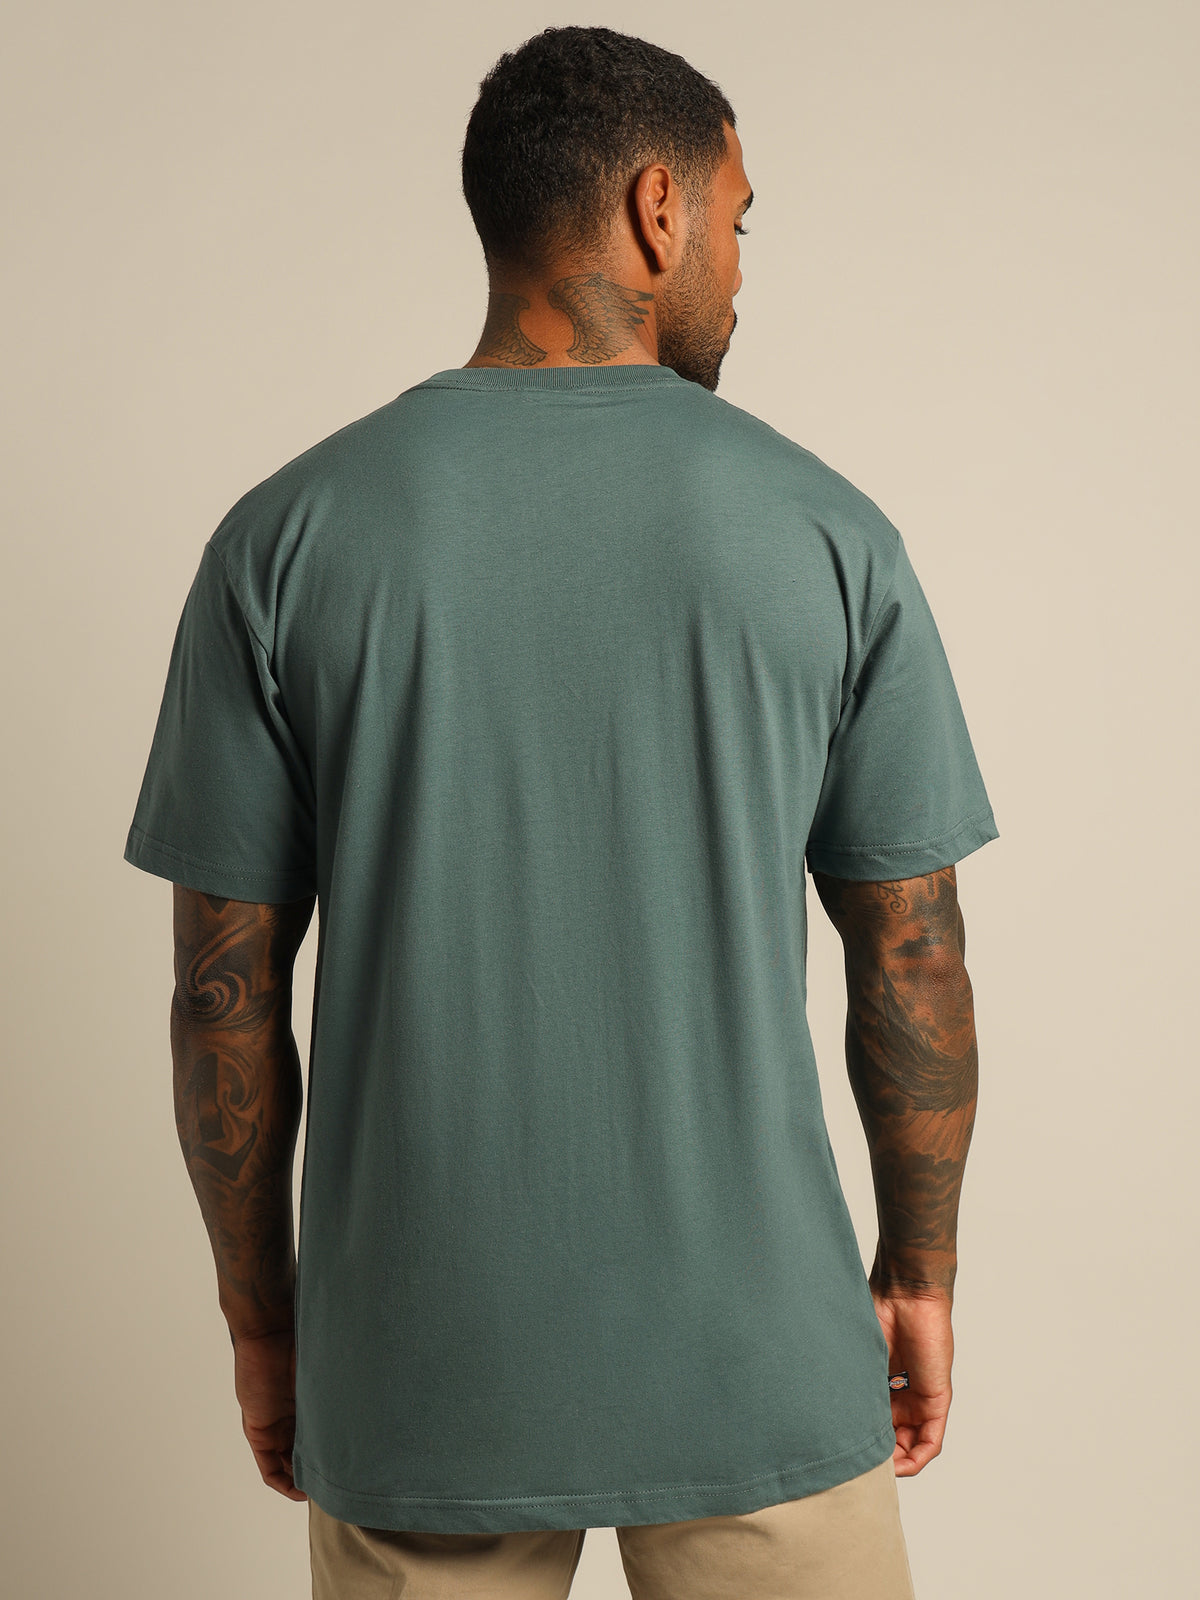 Lockhart T-Shirt in Green